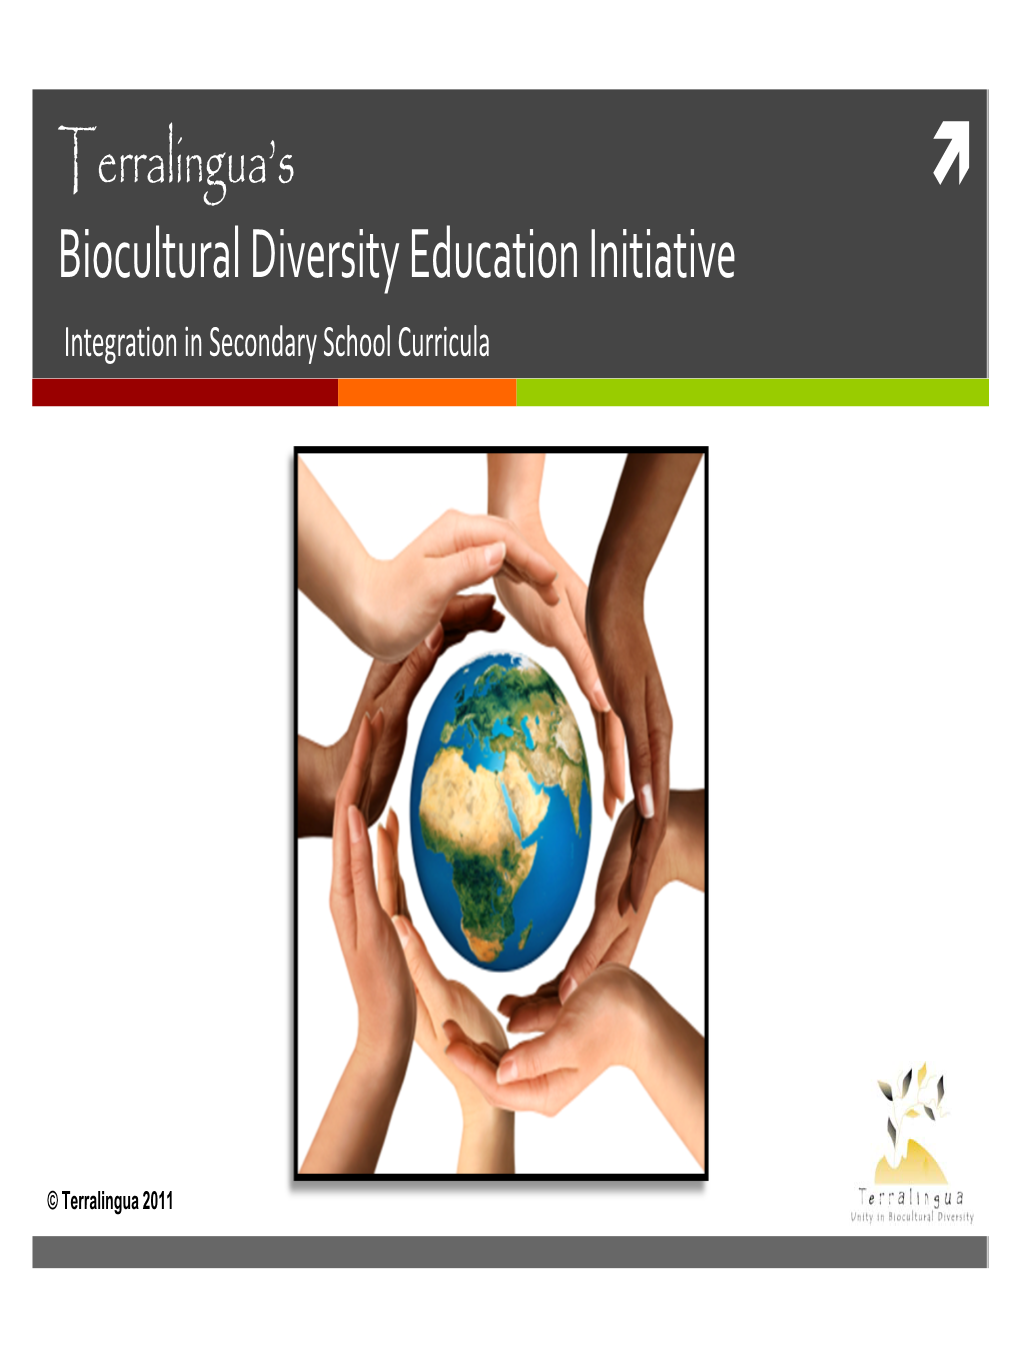 Integration of Biocultural Diversity Education